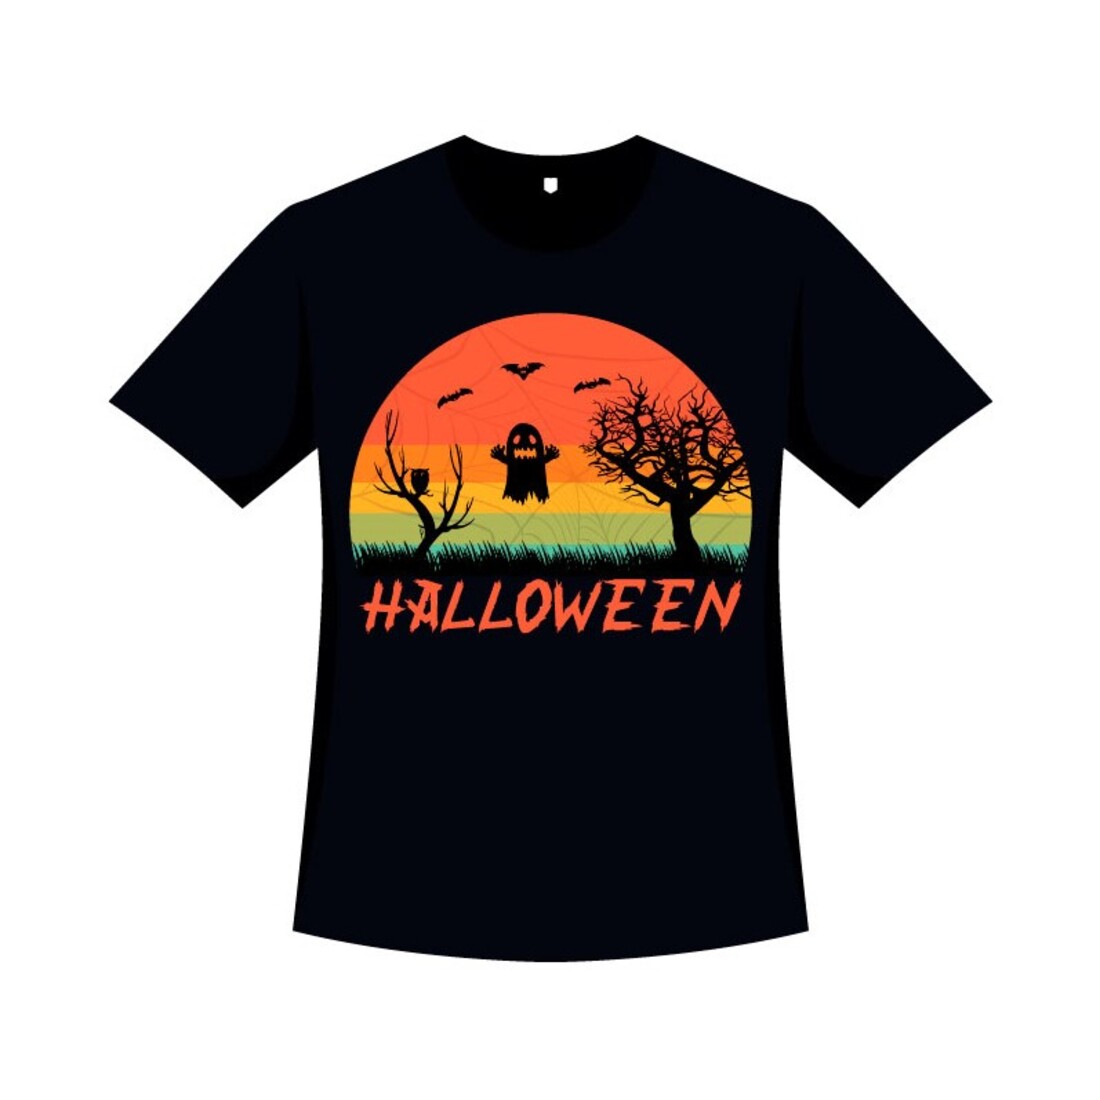 Retro Color Halloween T-shirt Design cover image.